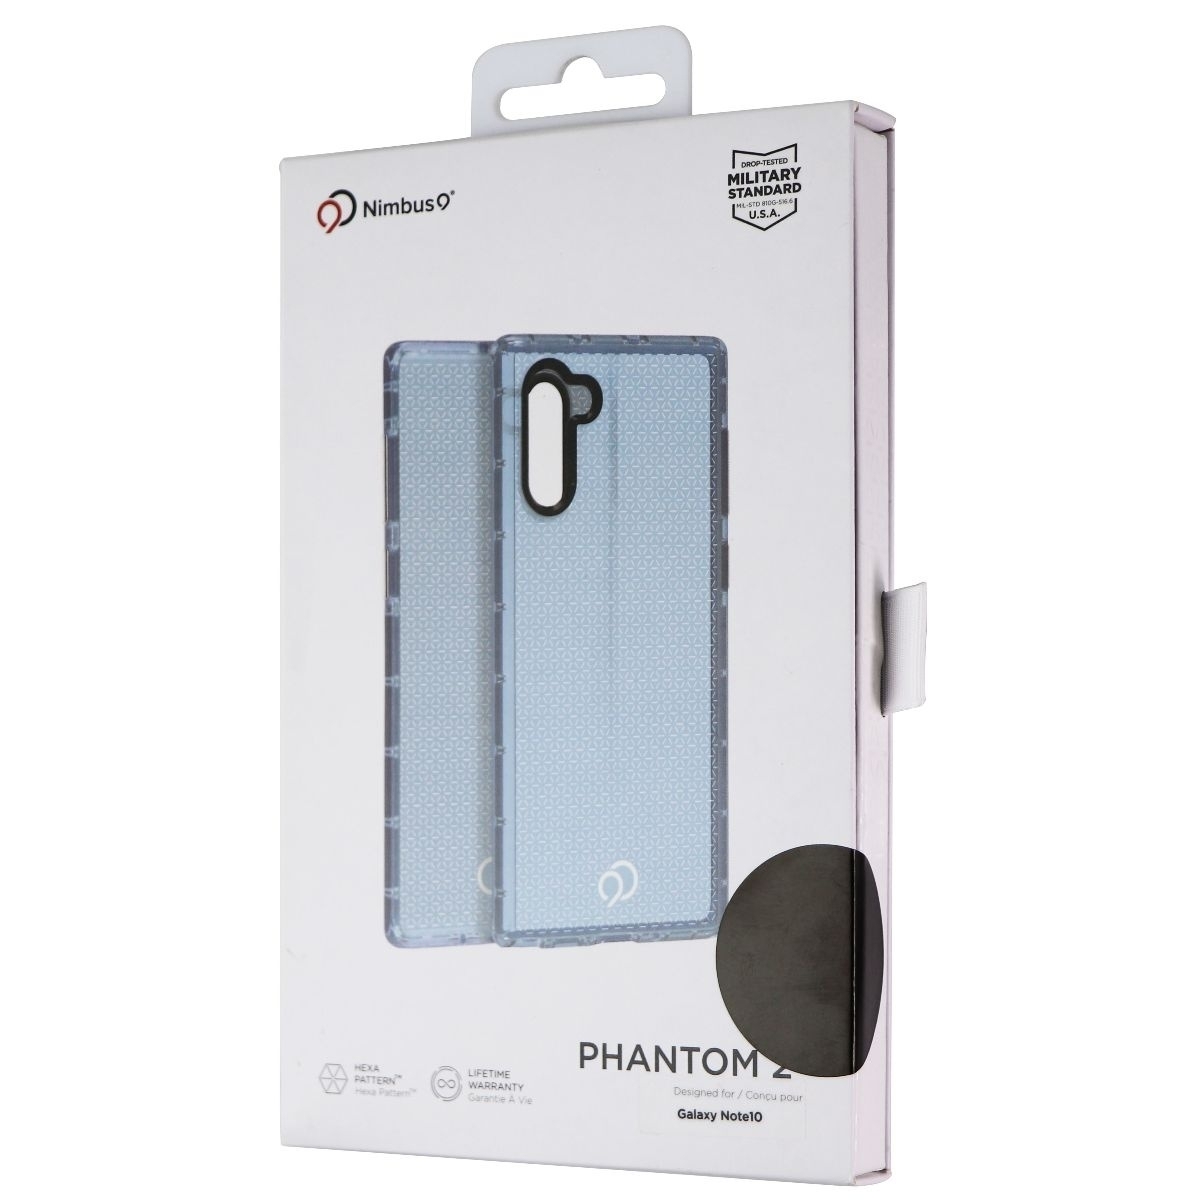 Nimbus9 Phantom 2 Phone Case For Samsung Galaxy Note10 - Pacific Blue